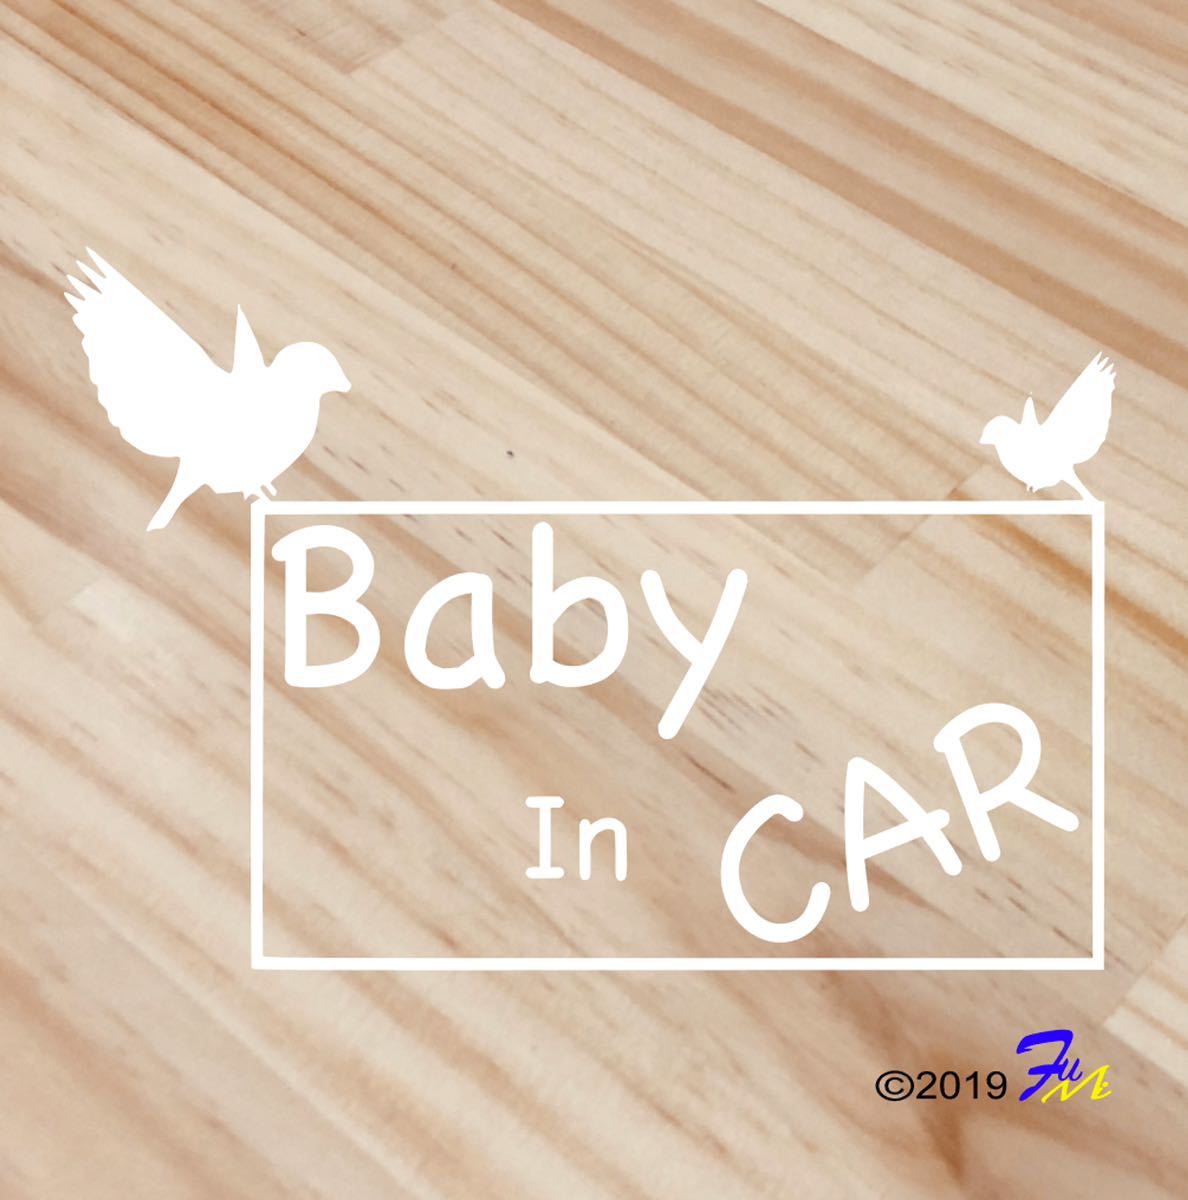 Baby In CAR29 стикер все 28 цвет #bFUMI